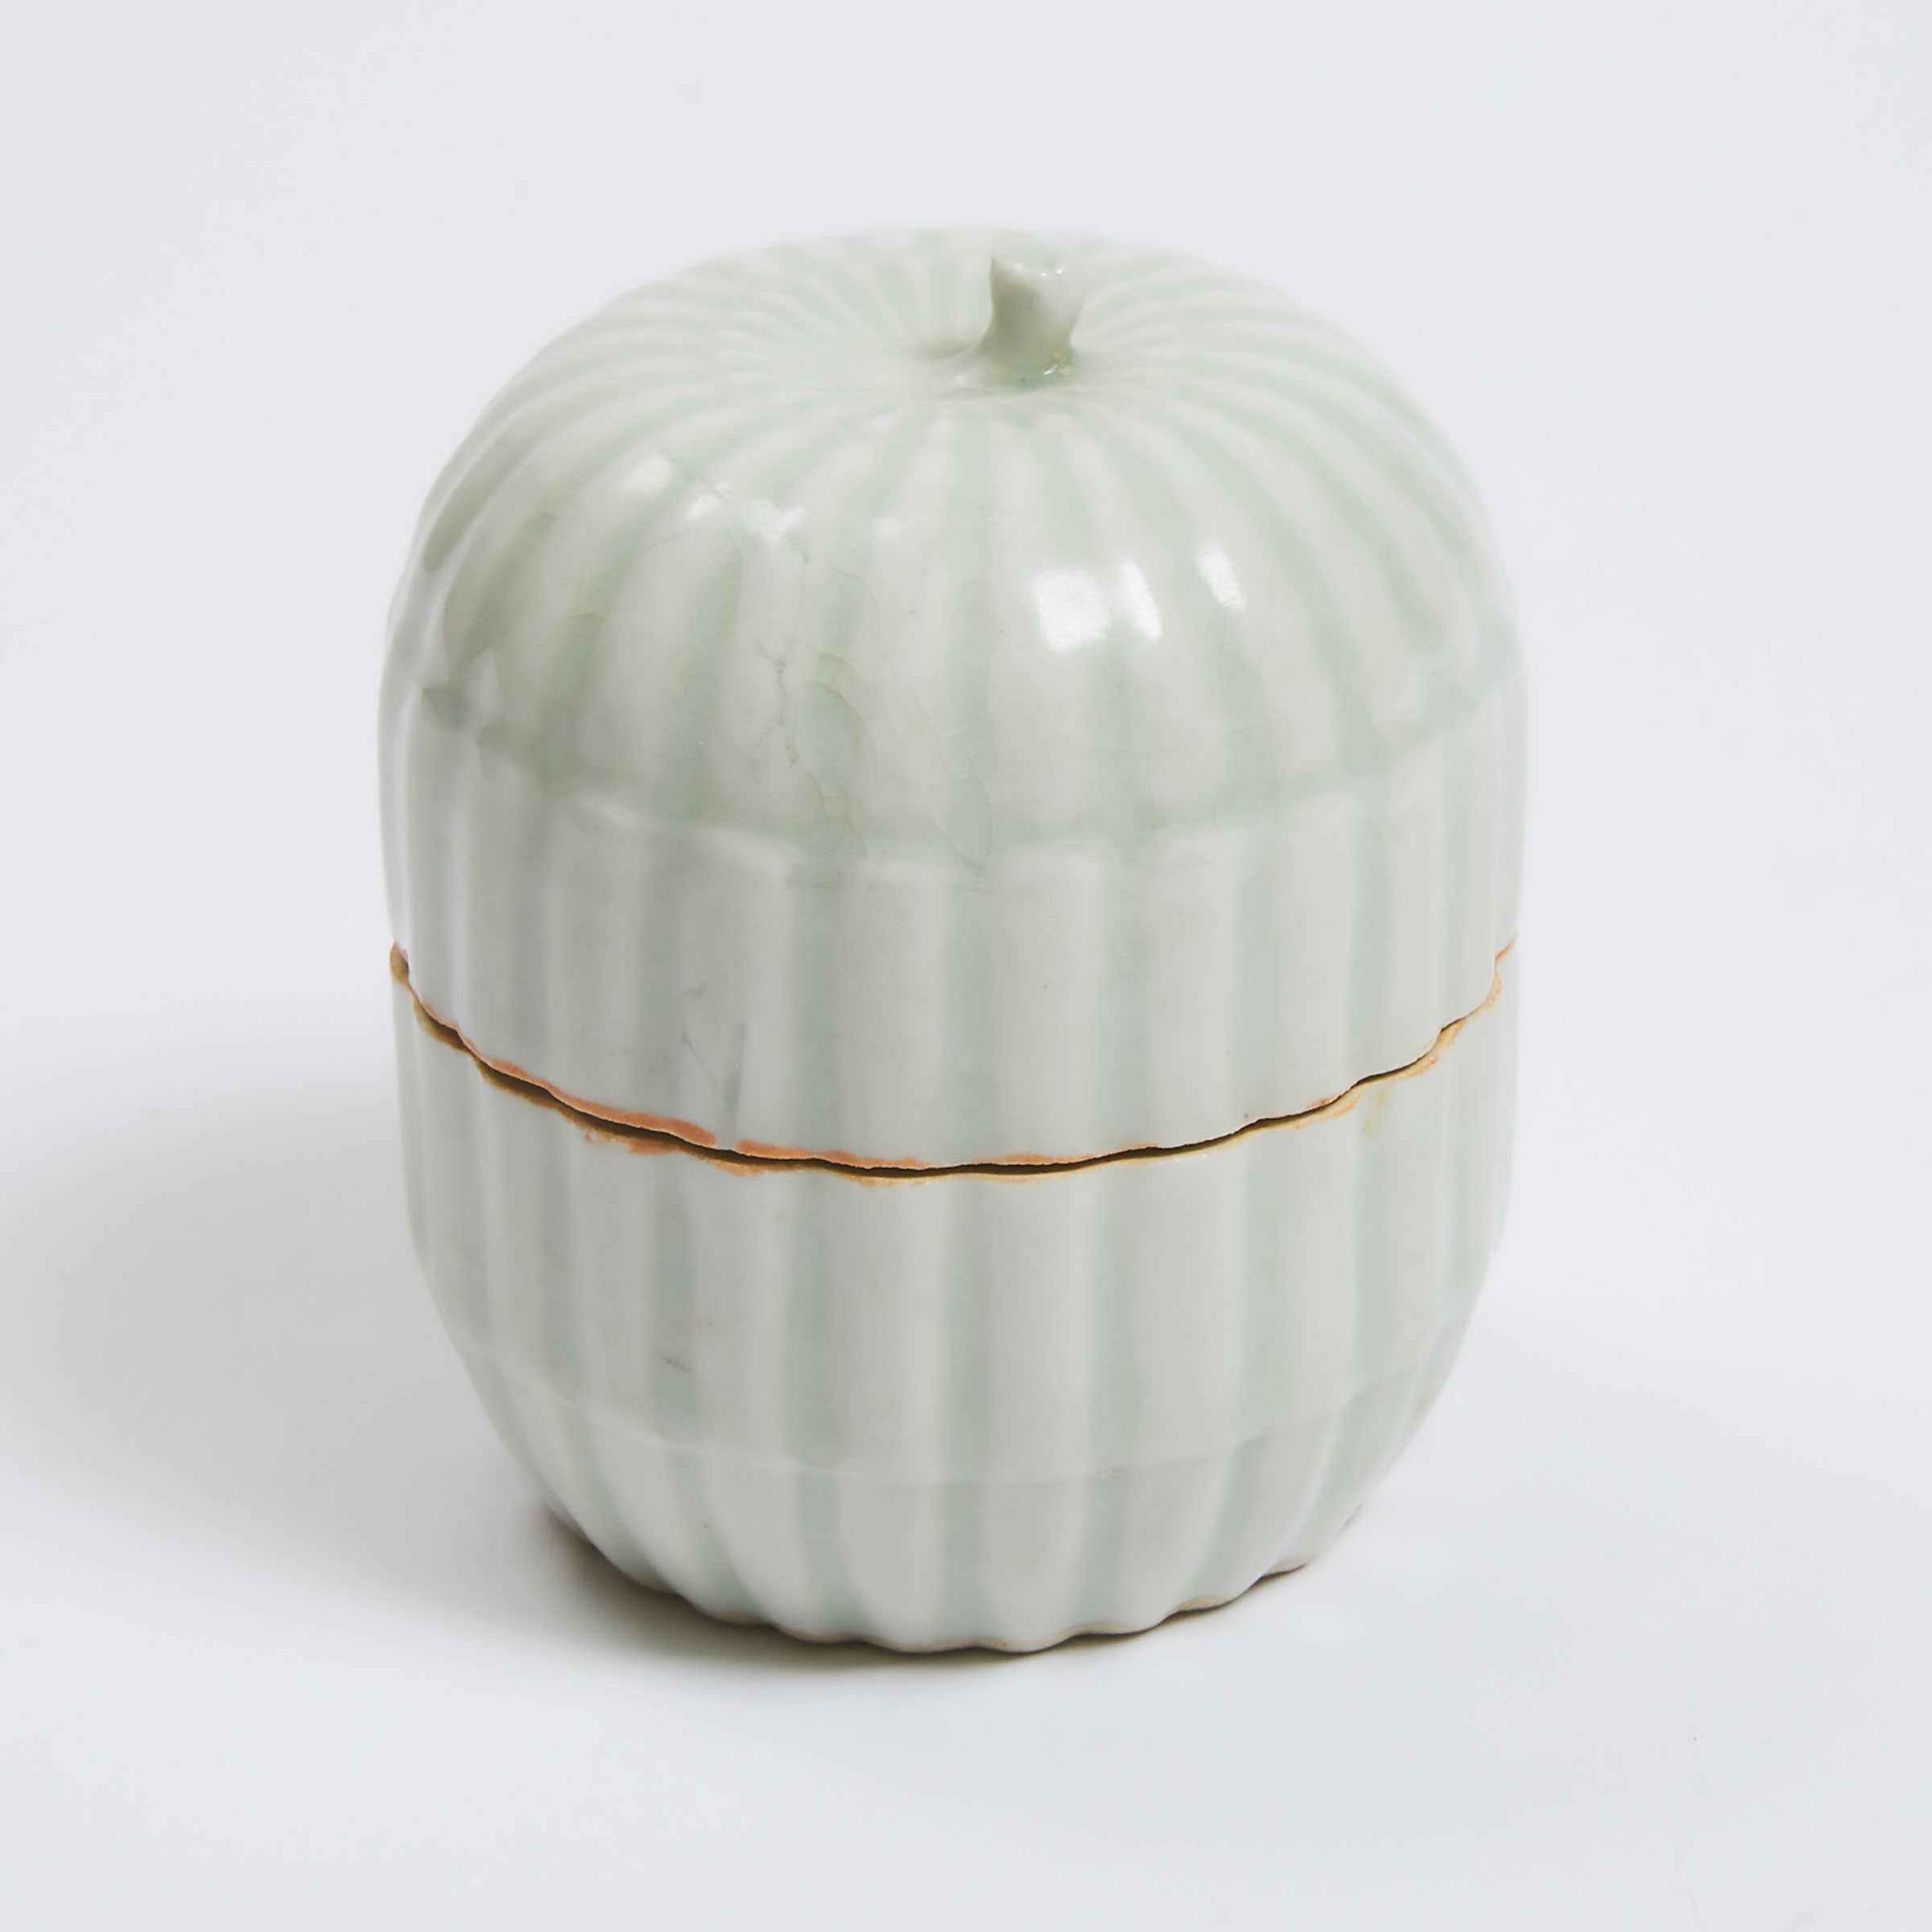 A Qingbai Melon-Form Box and Cover